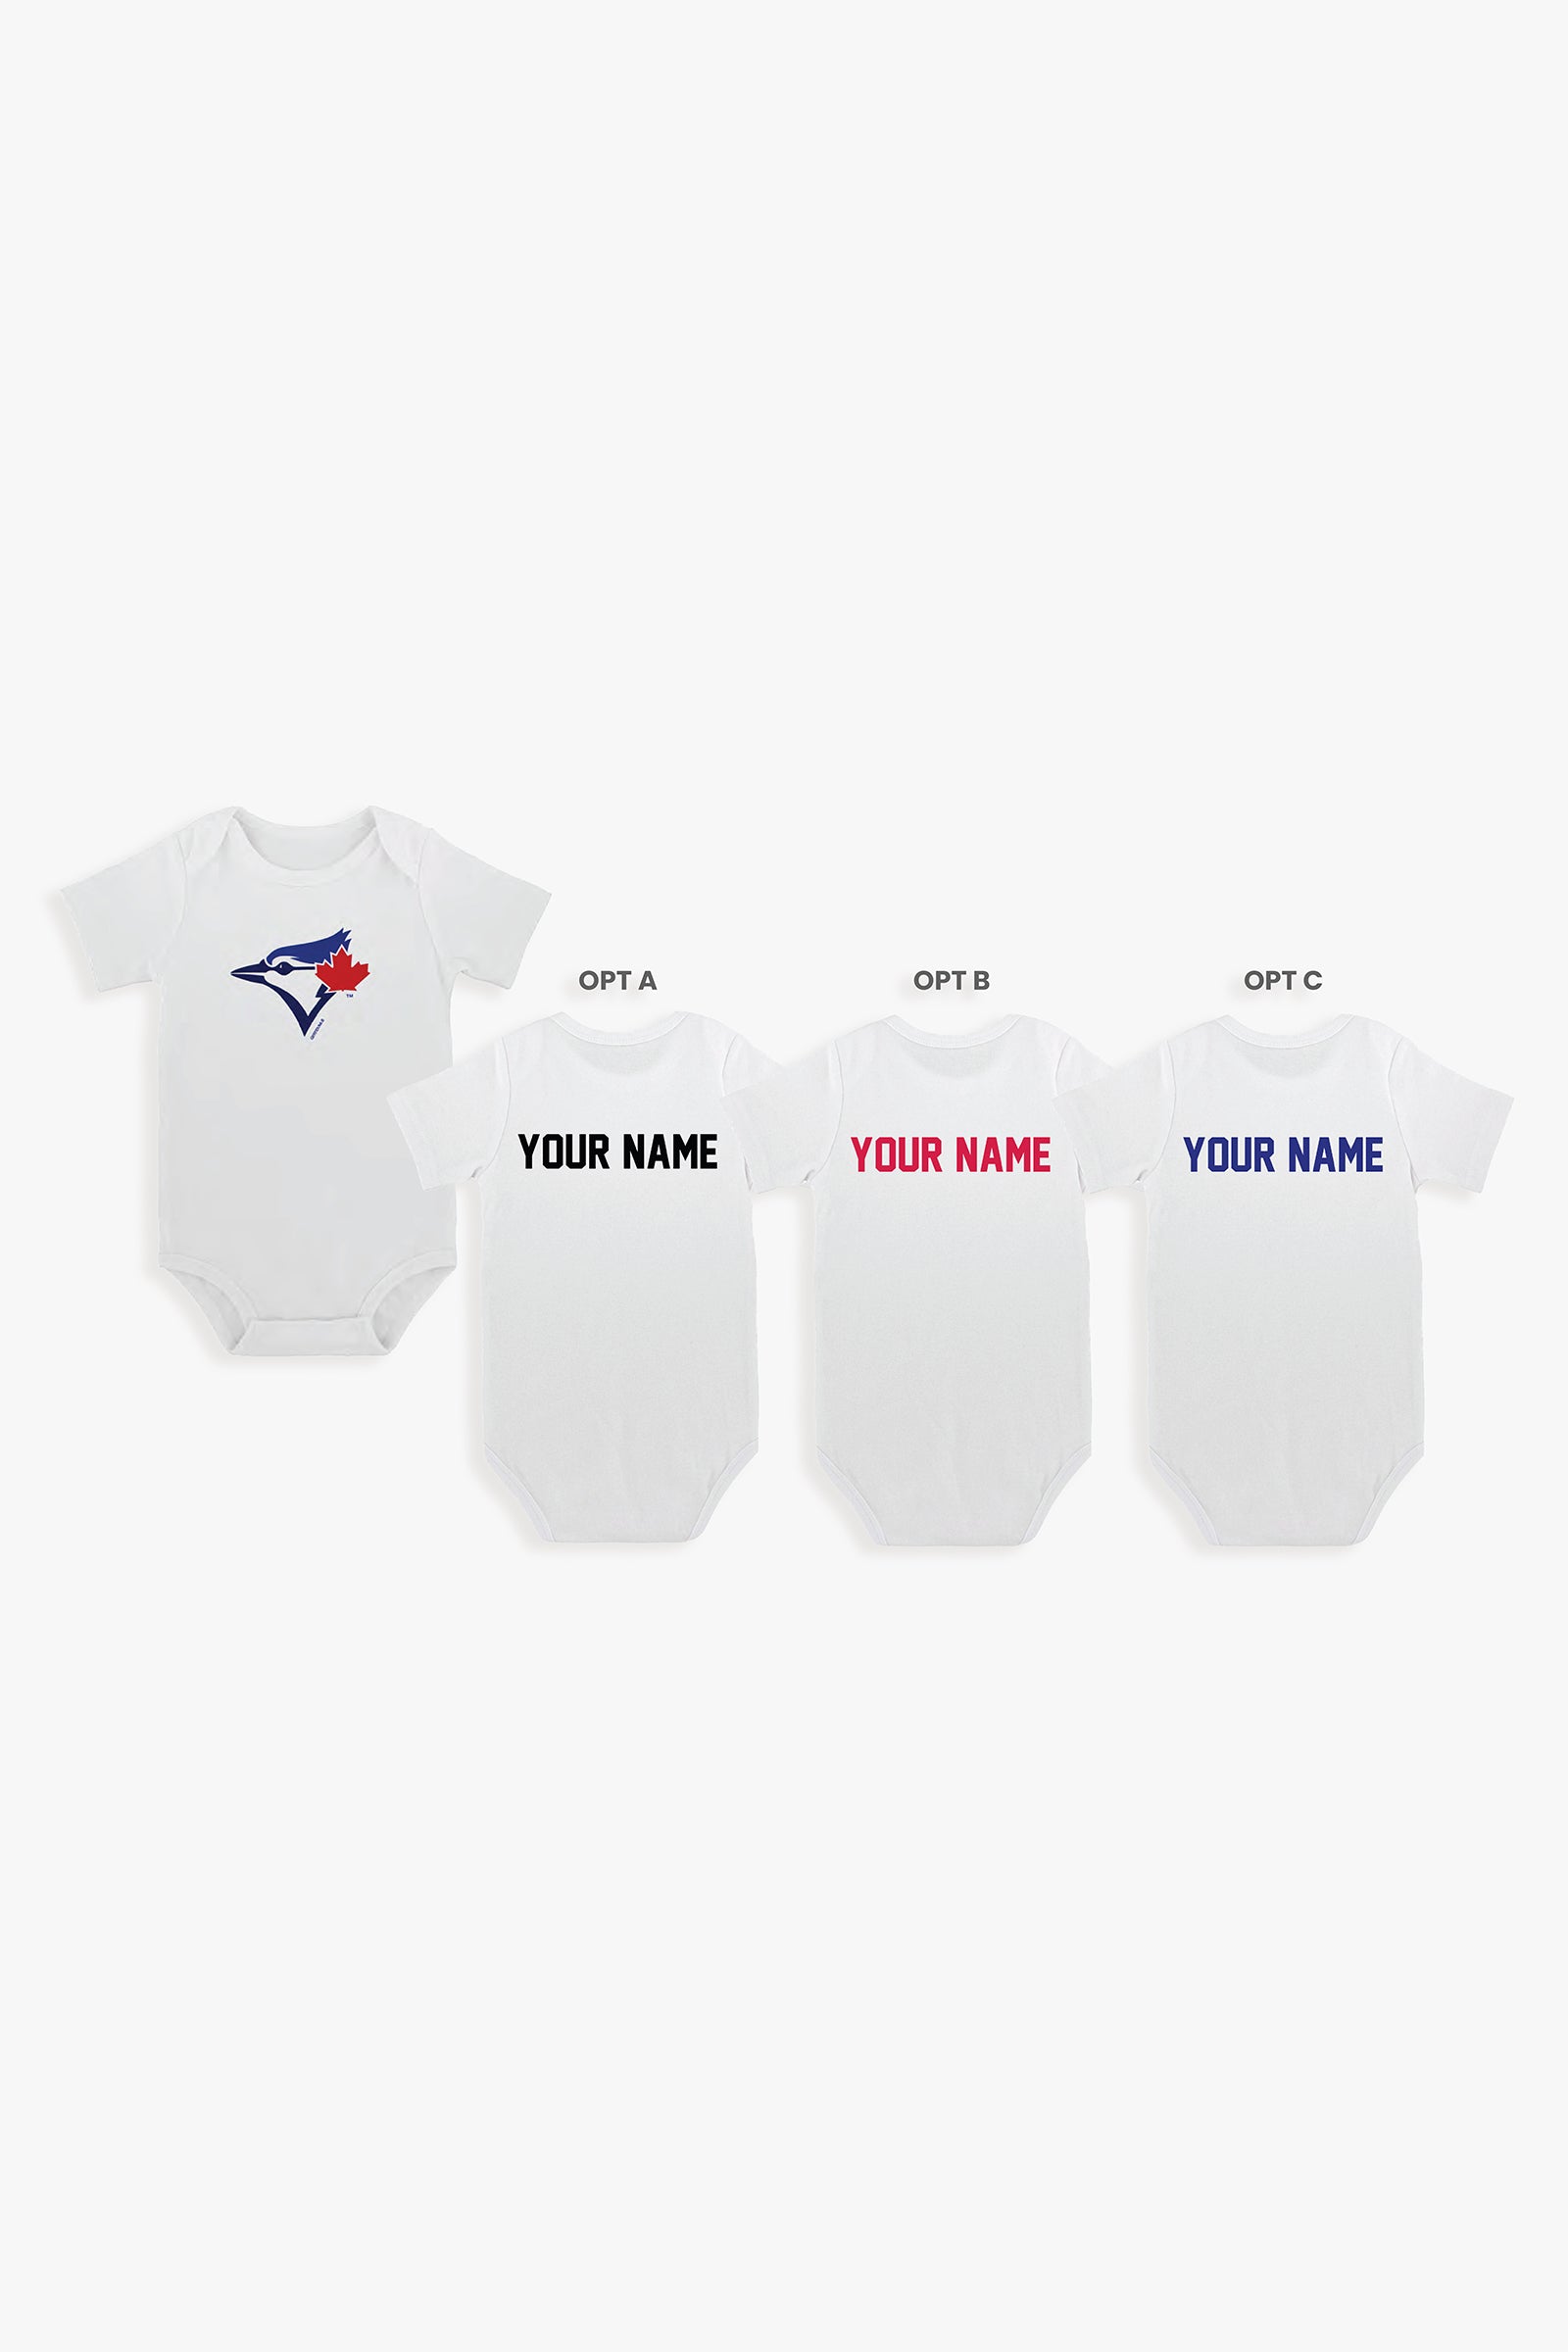 Gertex Customizable MLB Baby Bodysuit in White (6-9 Months)